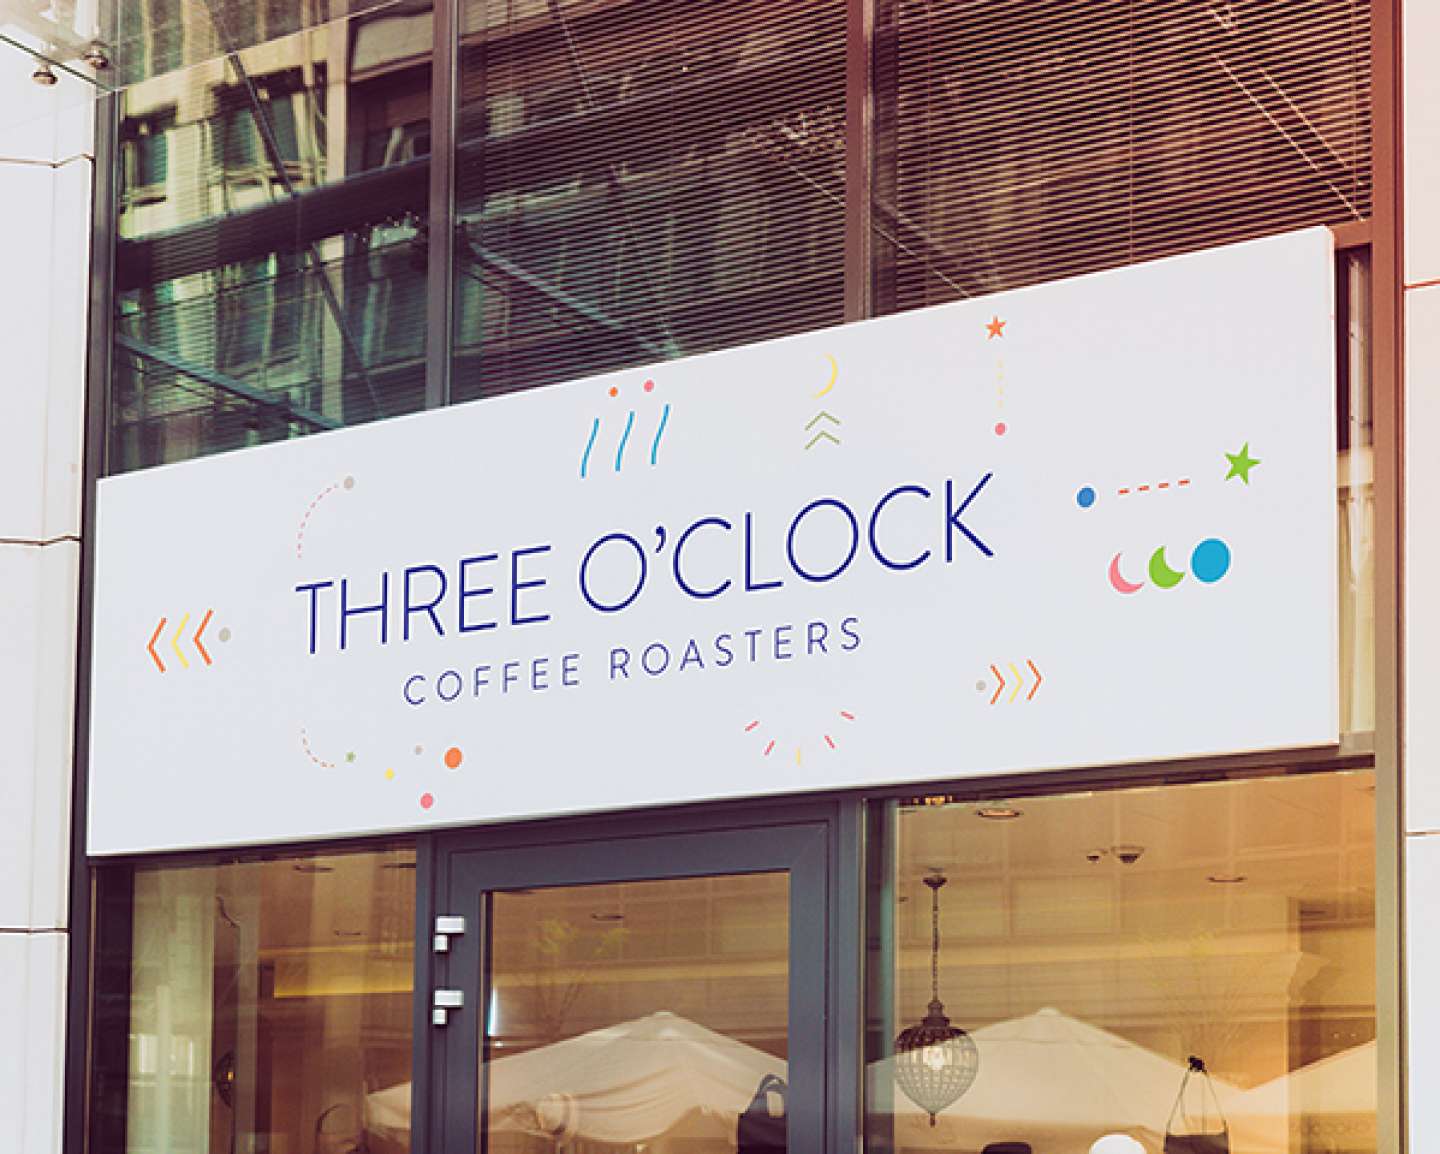 THREE O' CLOCK COFFEE ROASTERS